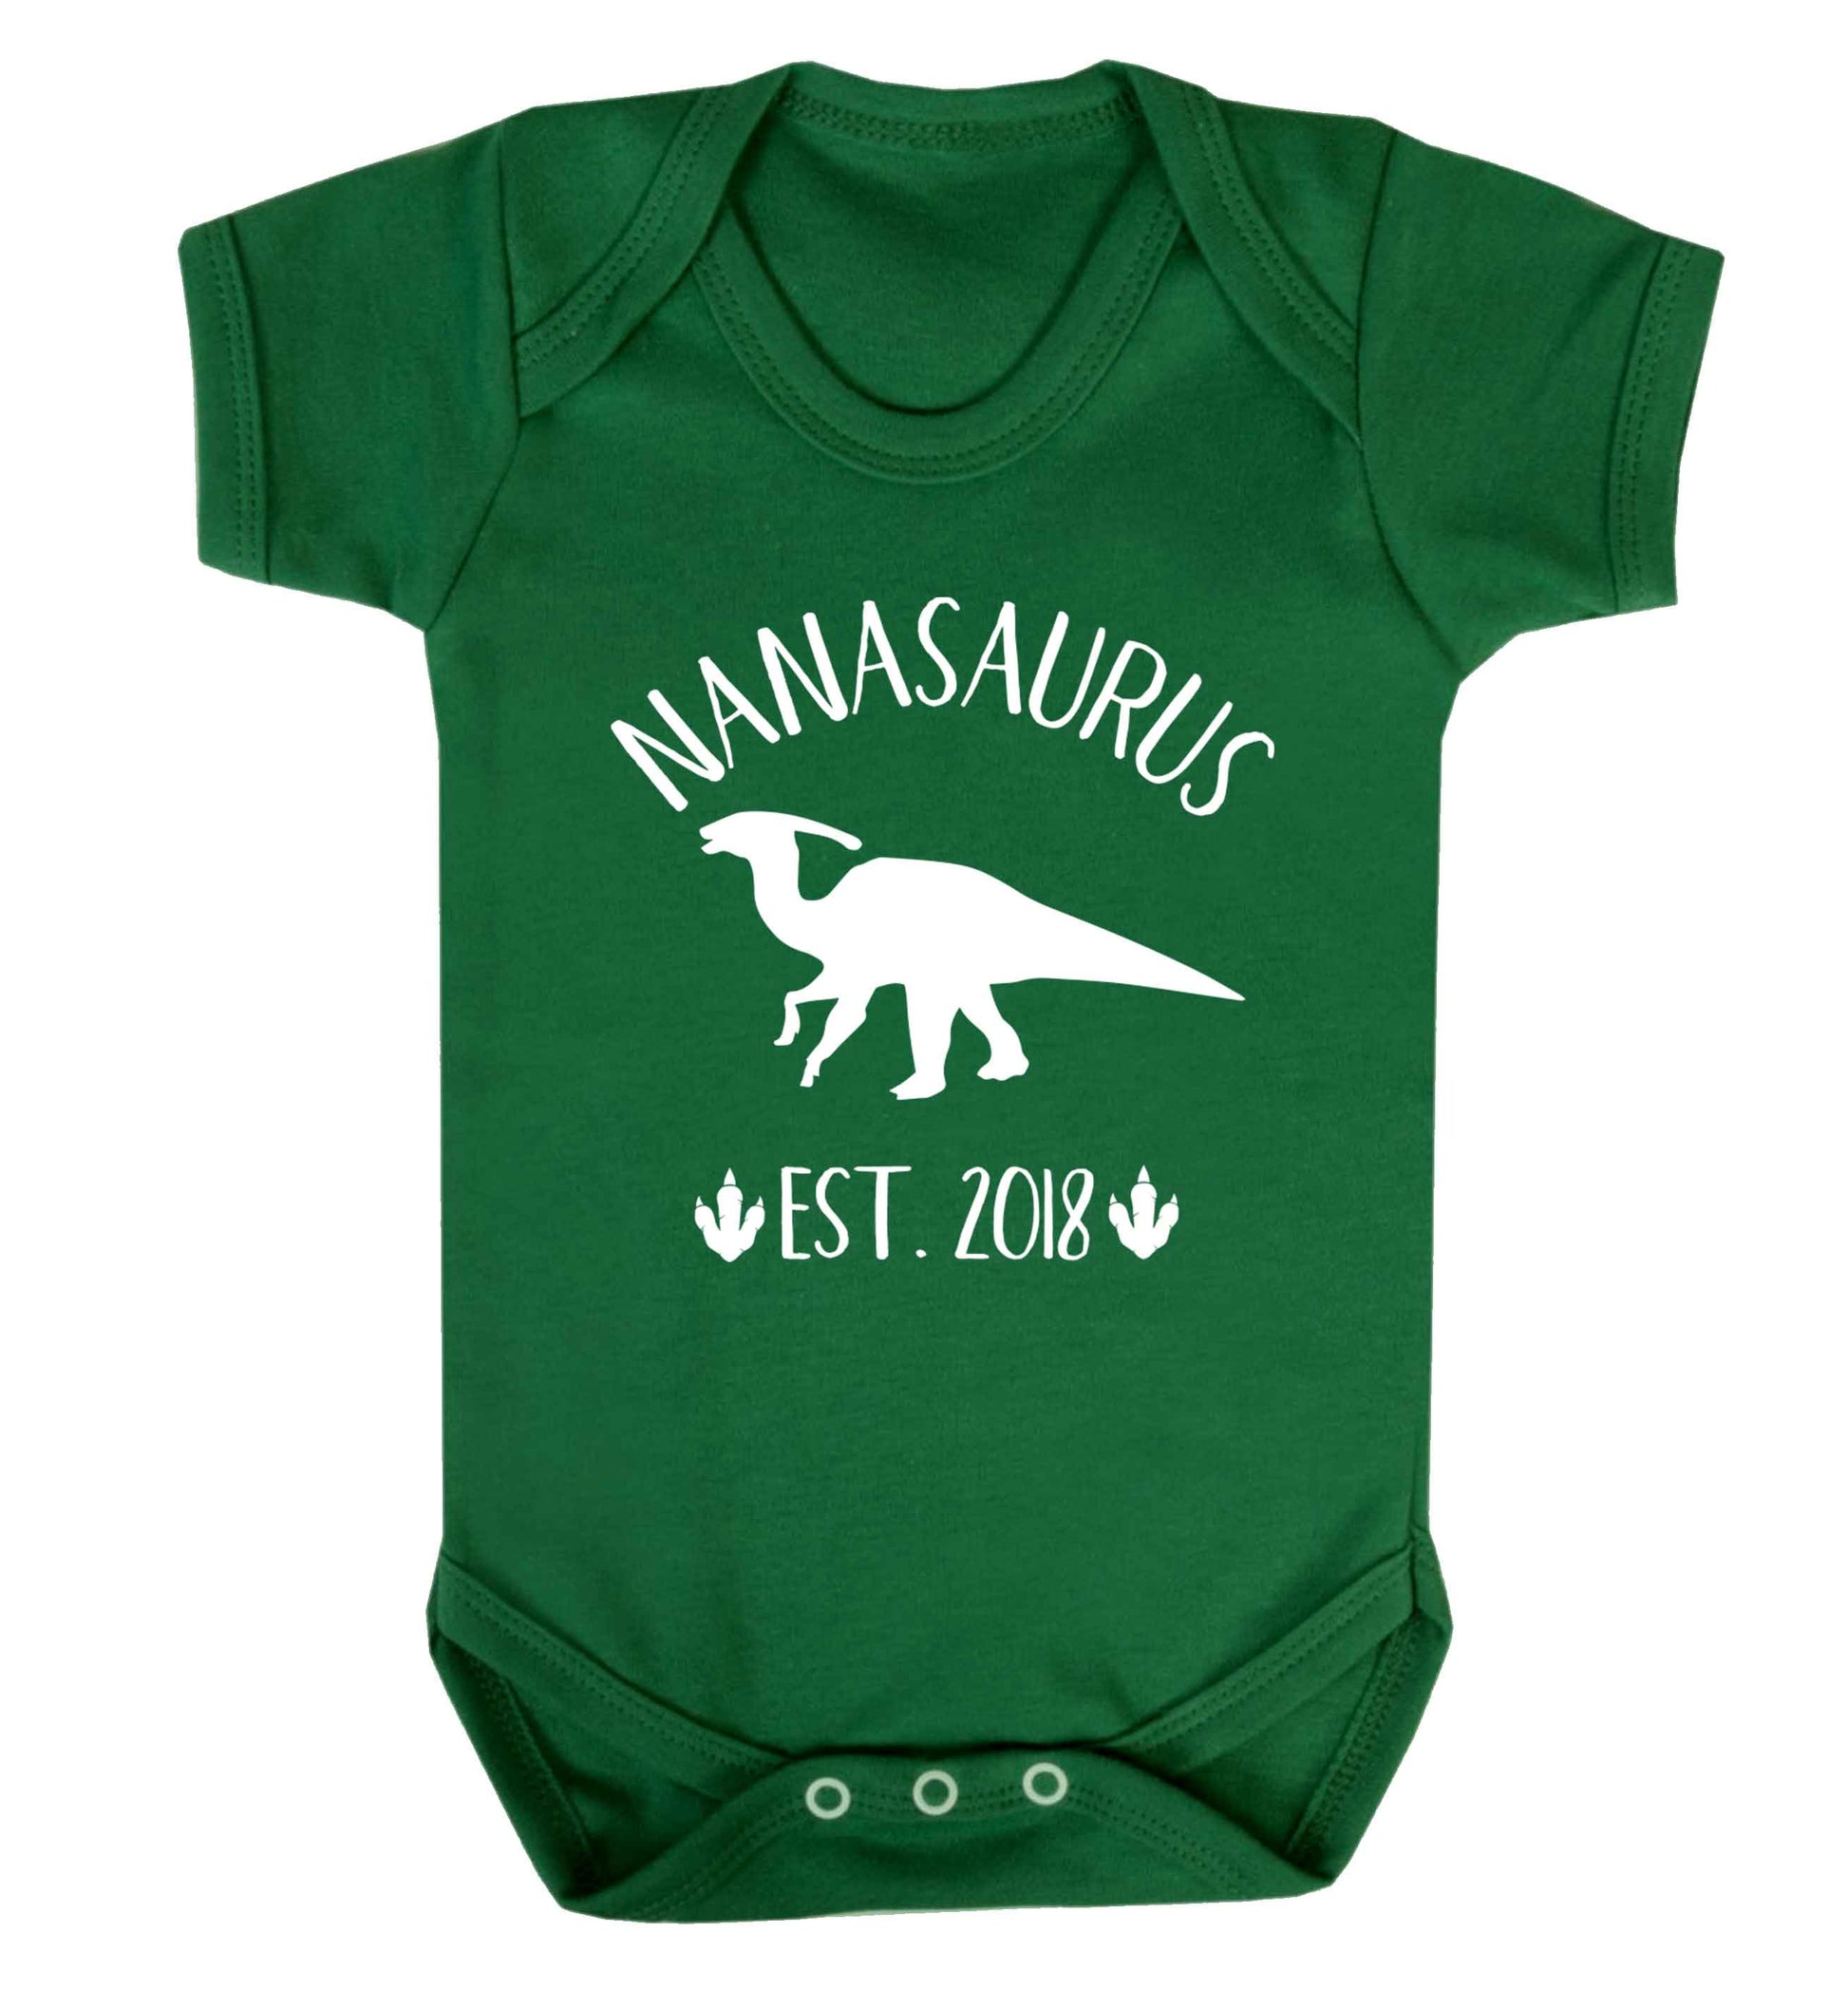 Personalised nanasaurus since (custom date) Baby Vest green 18-24 months